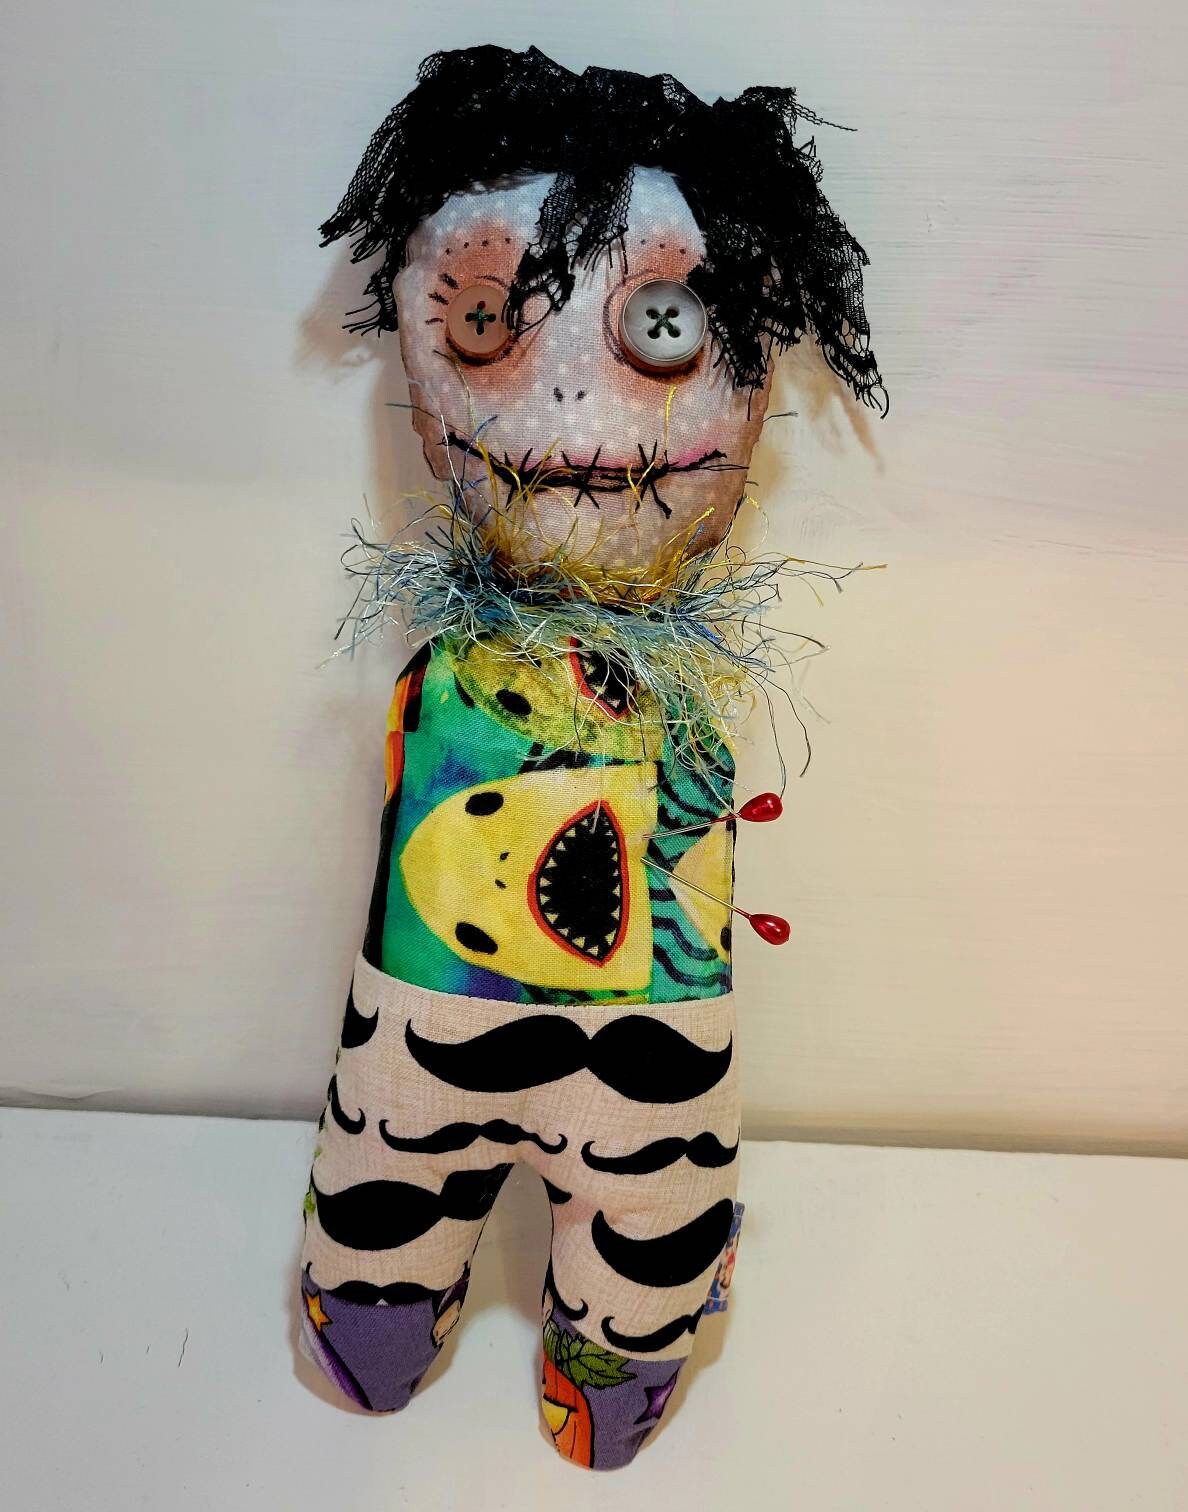 OOAK Creepy Horror Doll Artist Altered Stuffed Rabbit Gothic Easter Bunny  plush